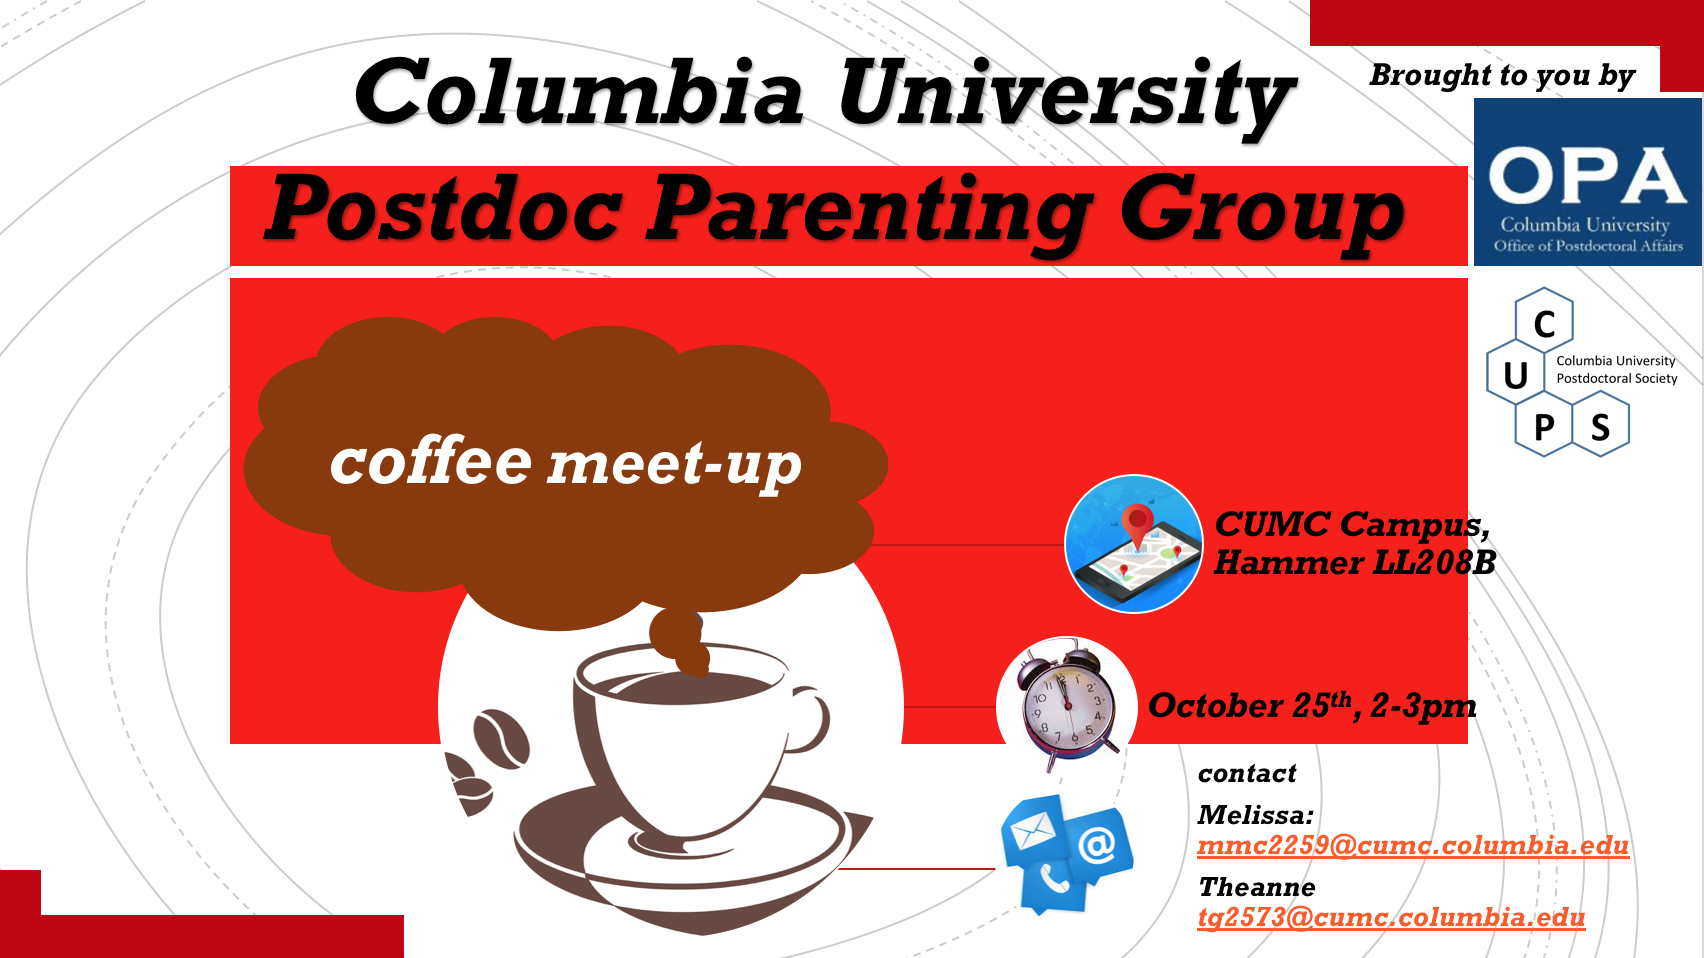 postdoc-parenting-group-meetup-coffee-time-cumc-october-2018 